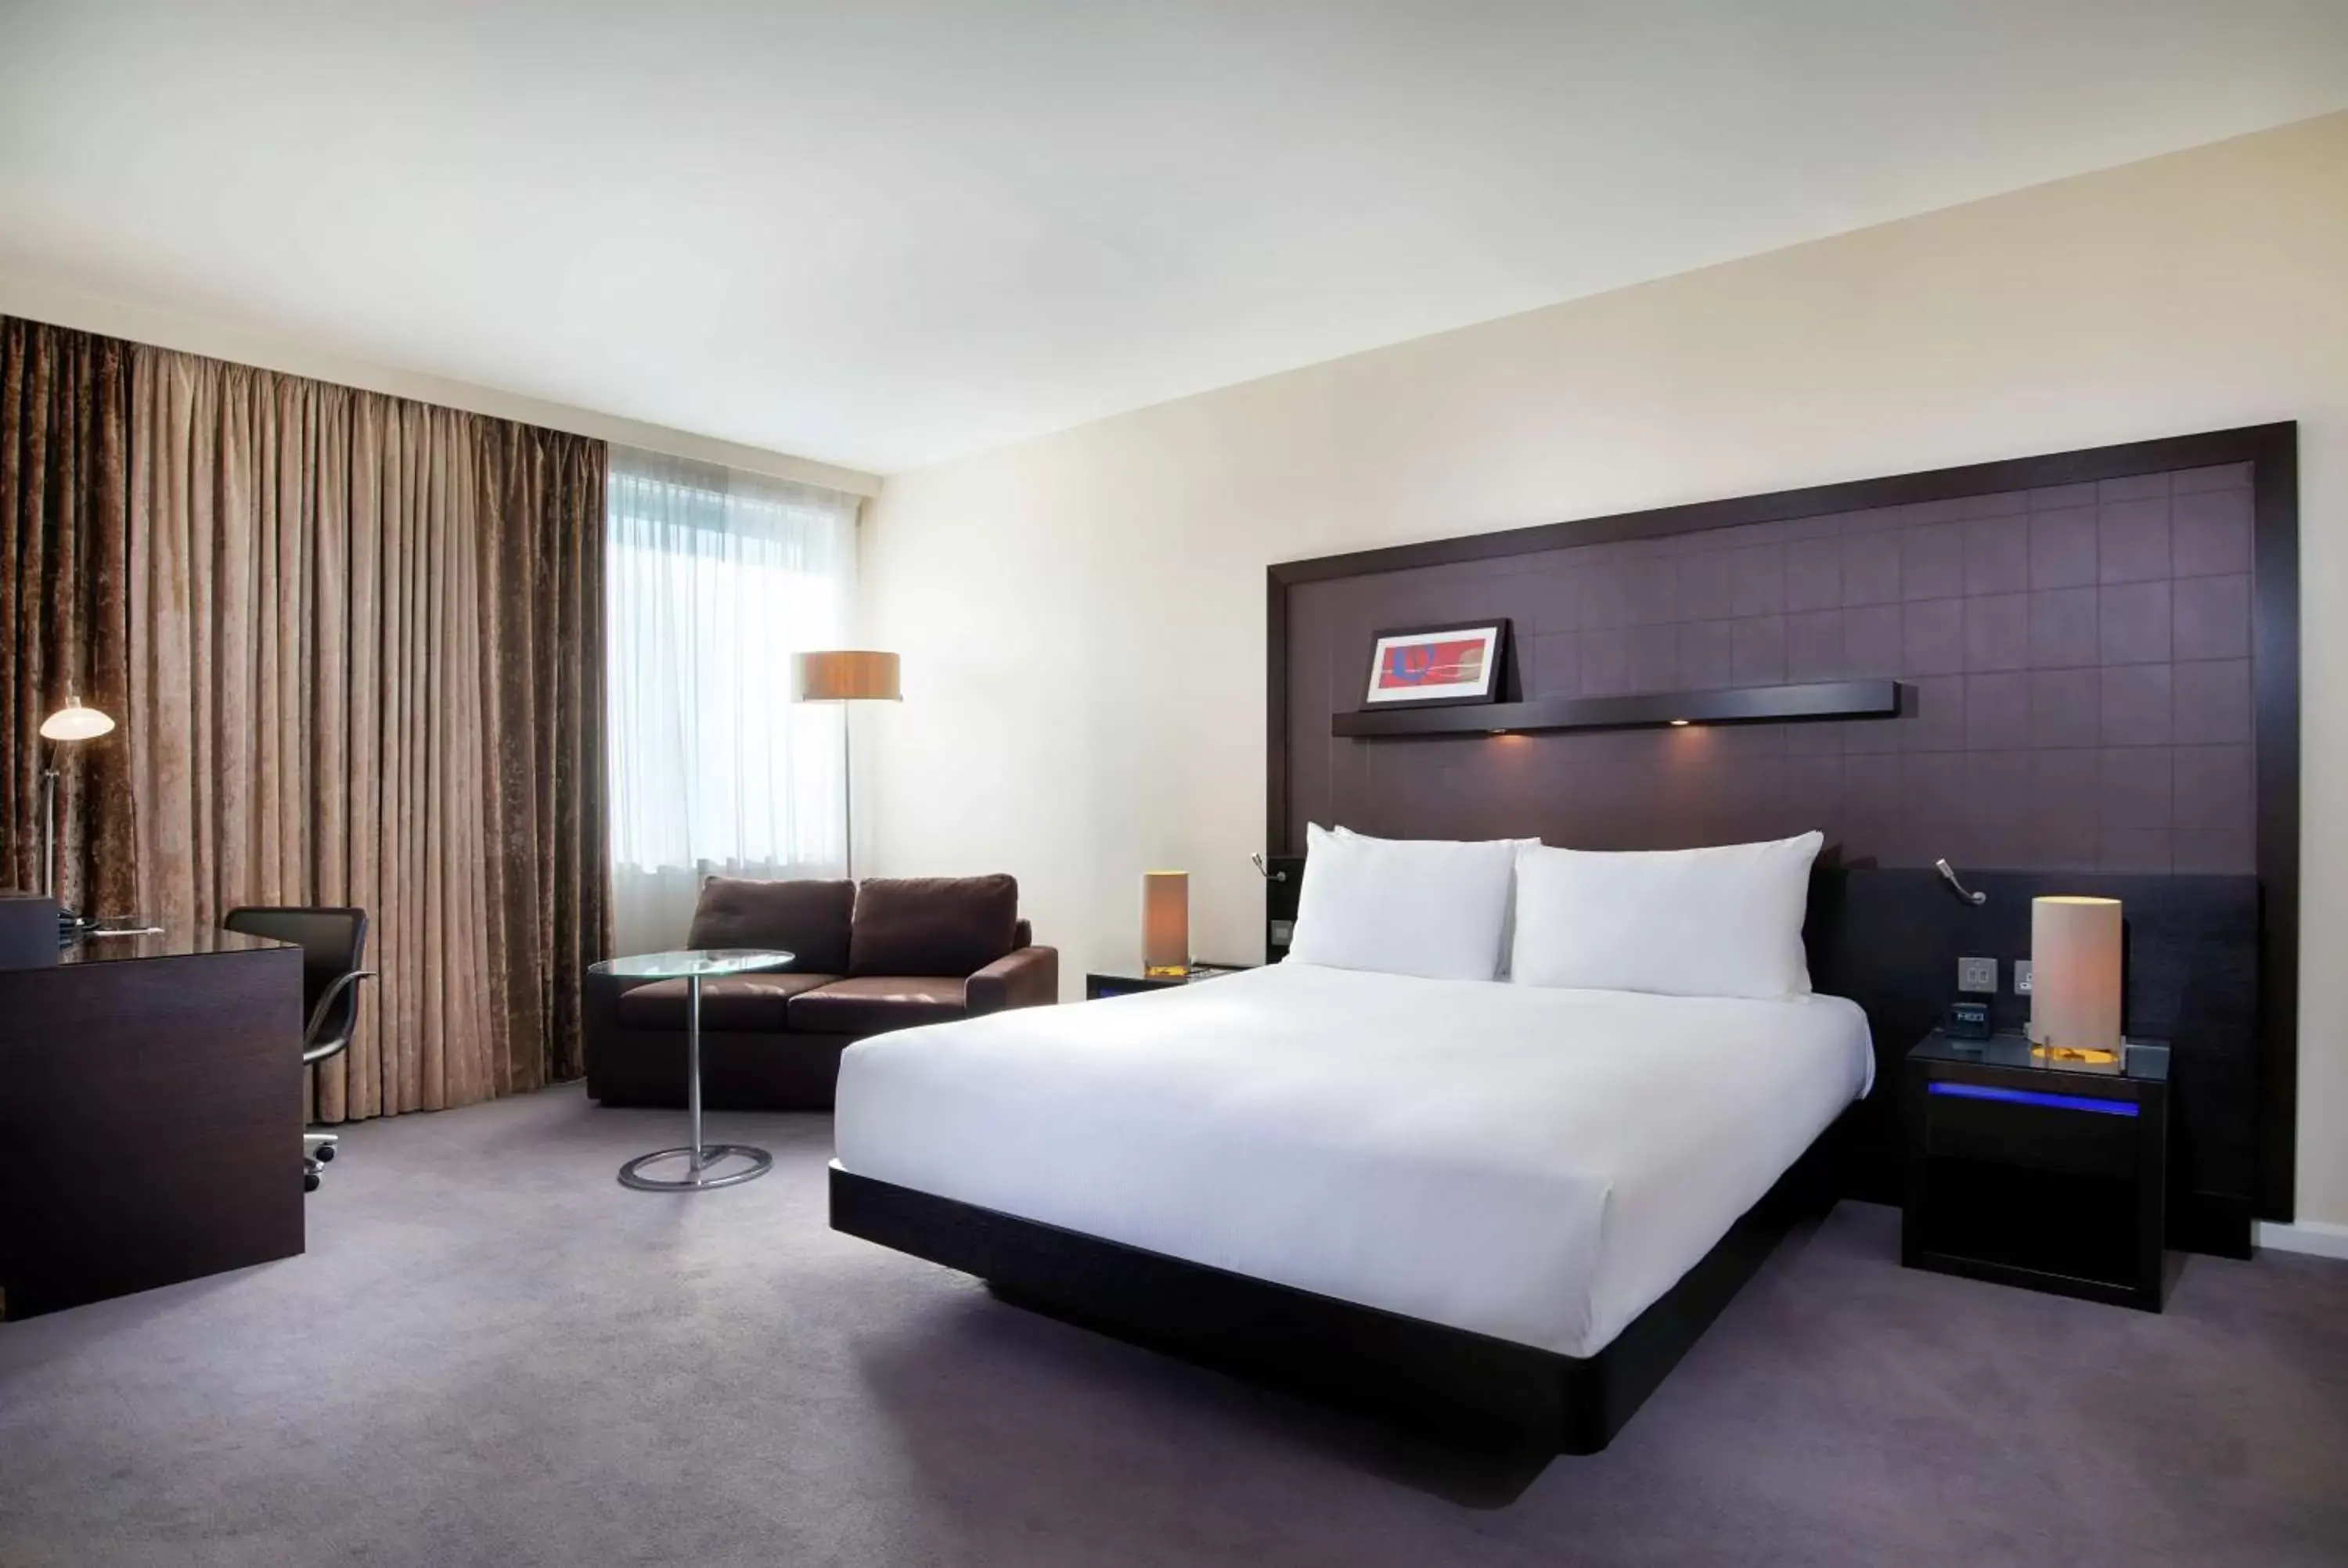 Bedroom in Hilton London Canary Wharf